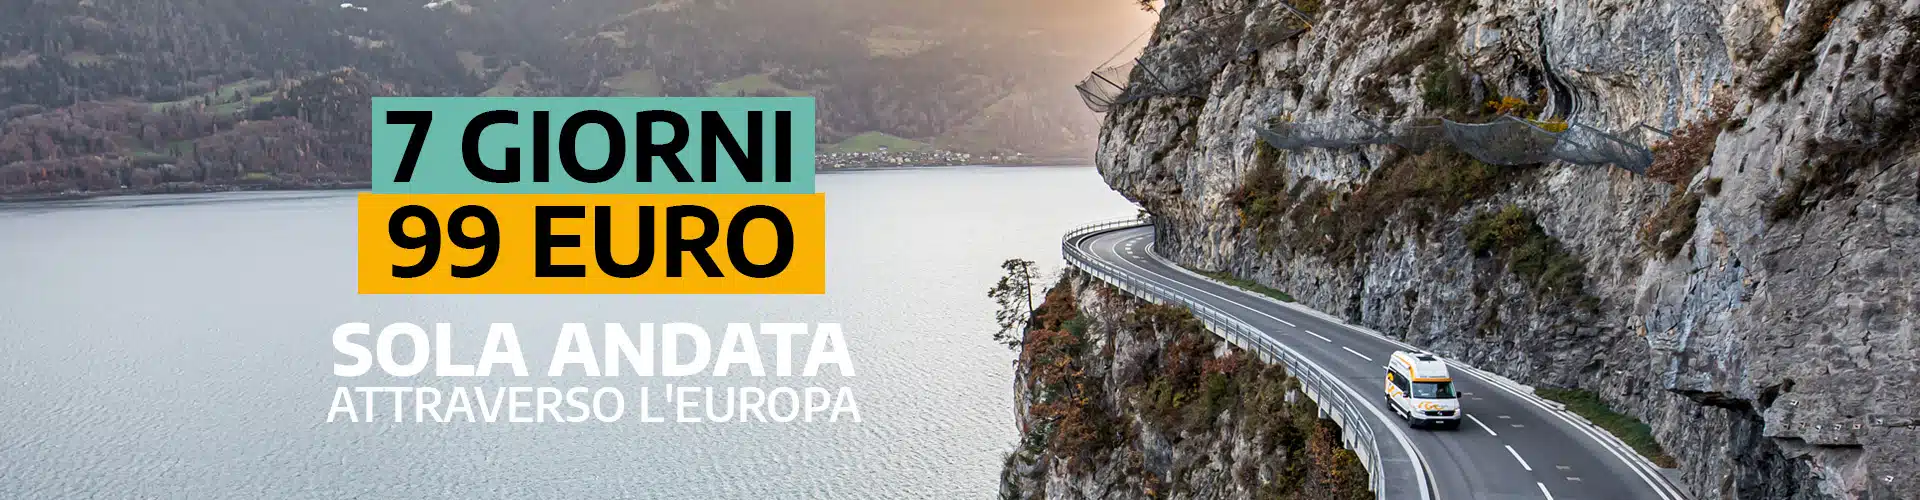 roadsurfer Rallyes, One Way Trips through Europe